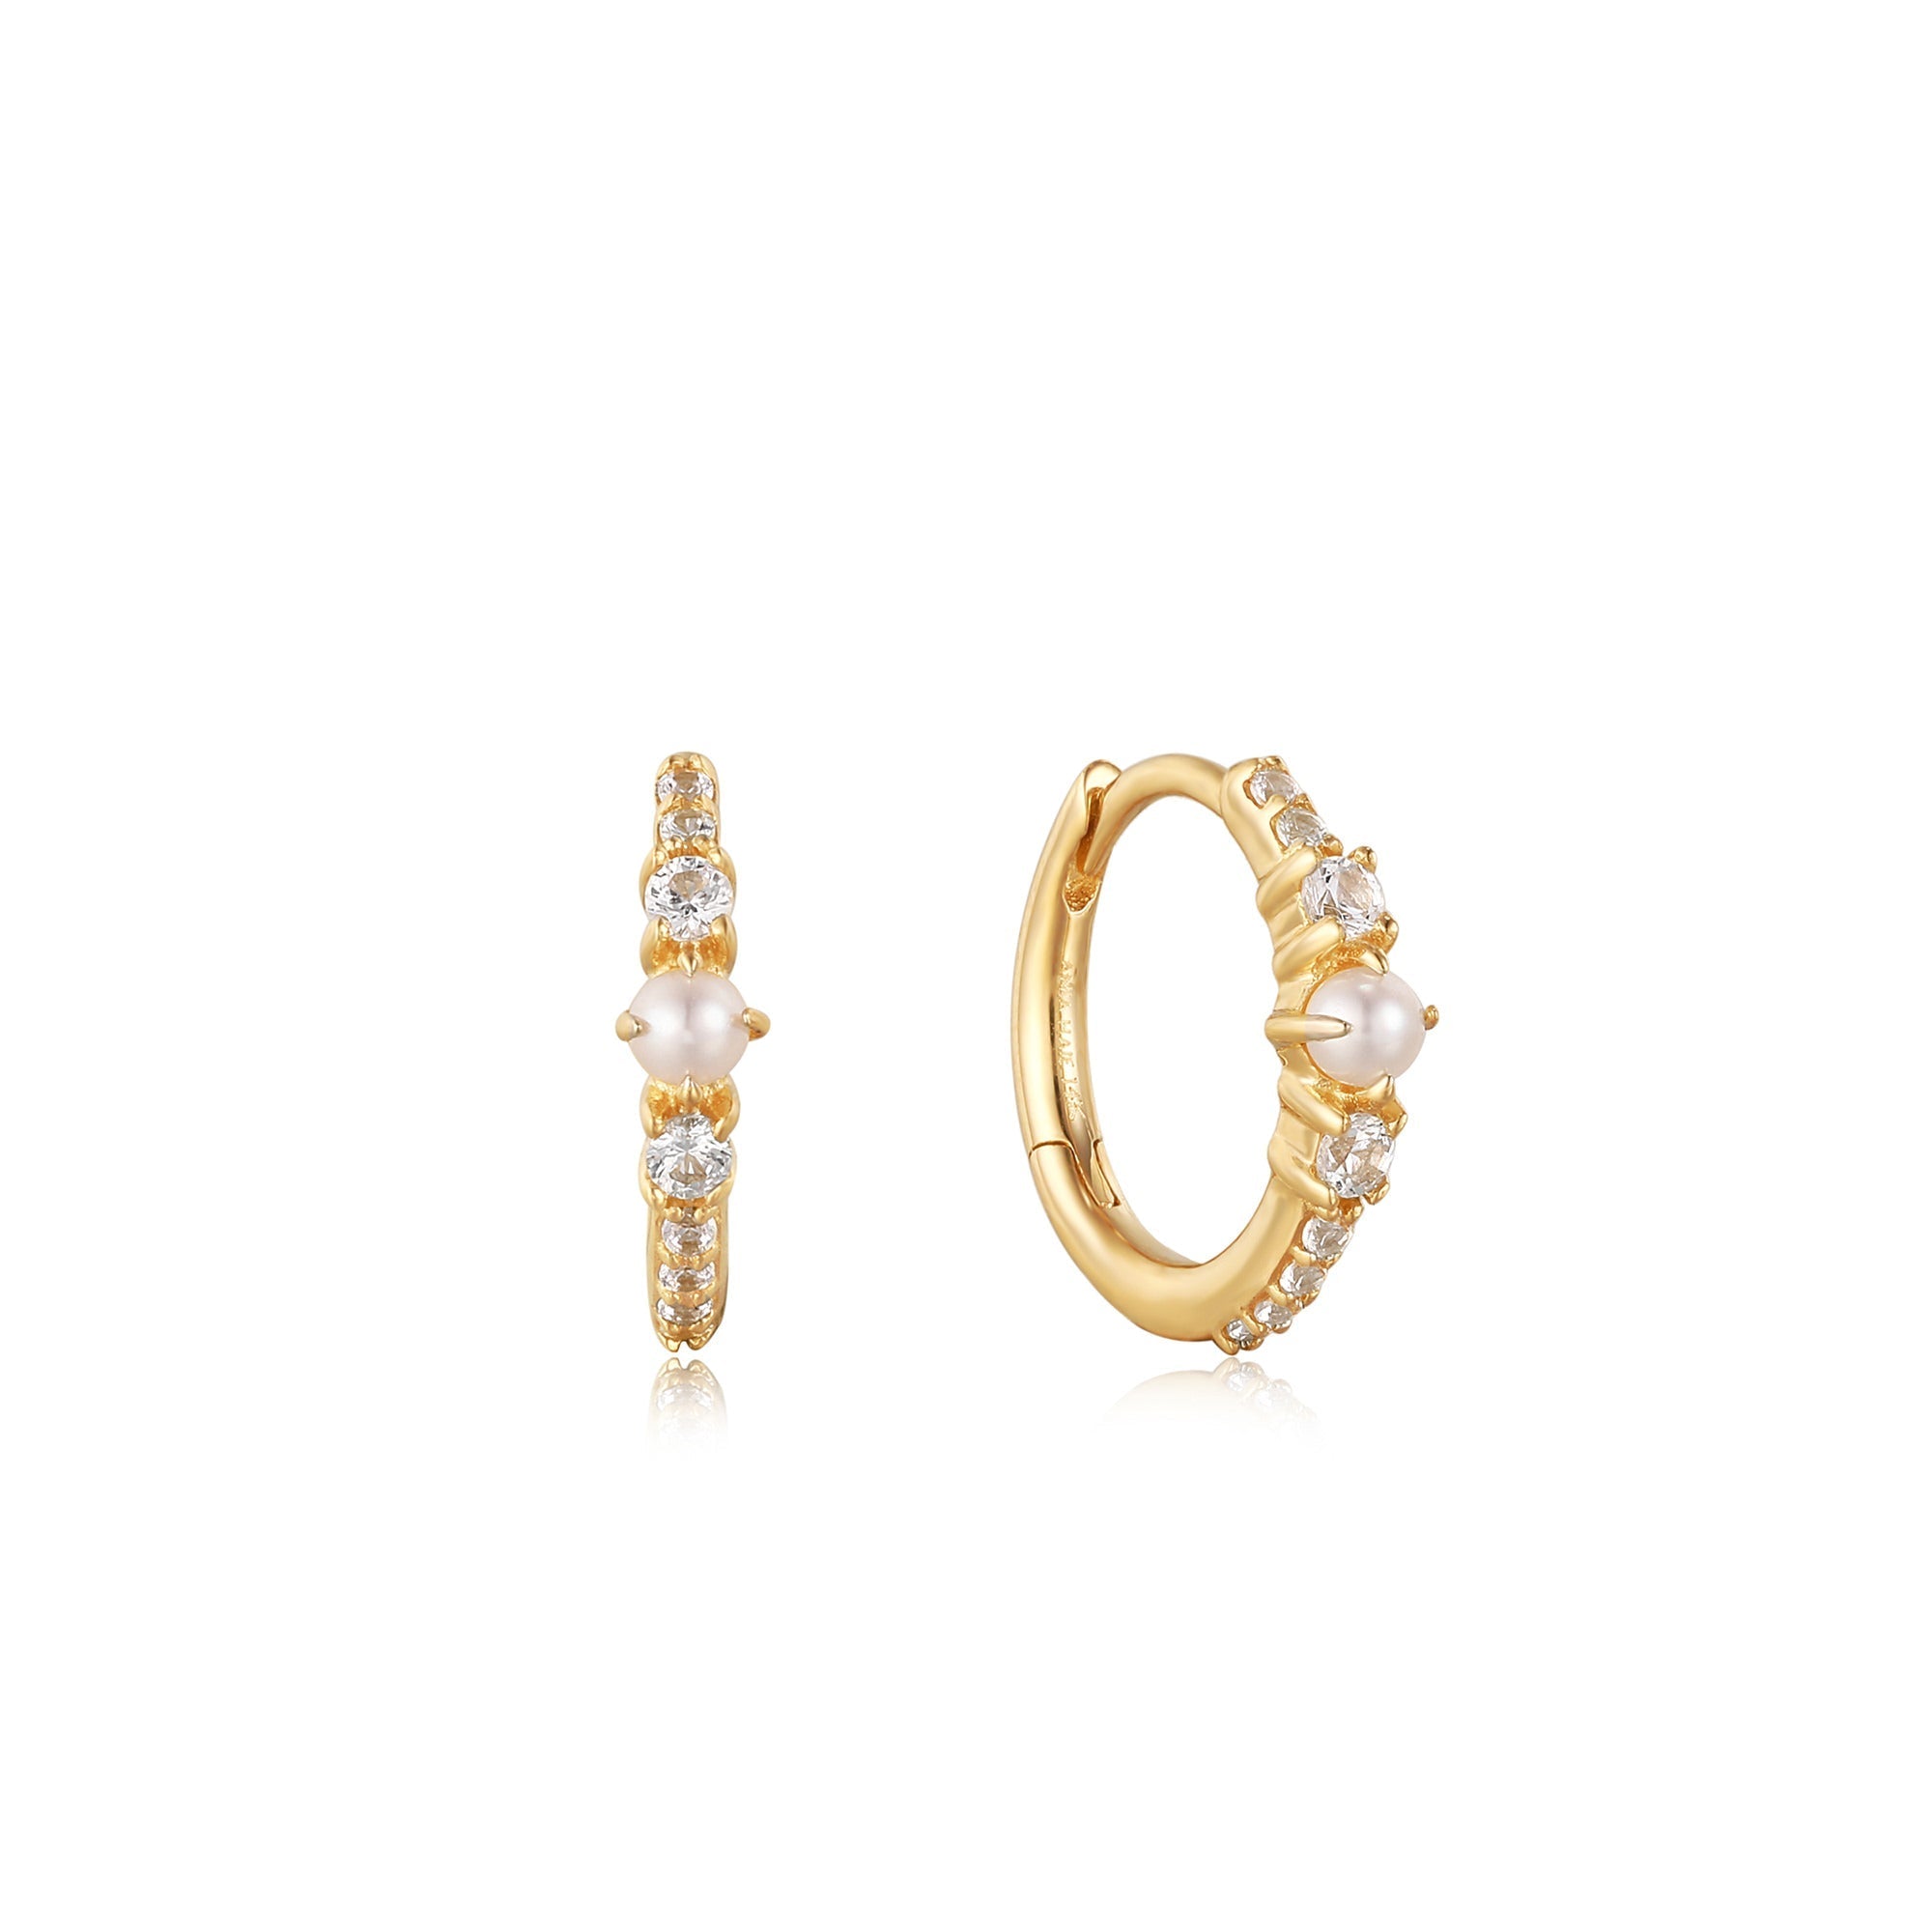 Ania Haie 14kt Gold Pearl and White Sapphire Huggie Hoop Earrings Earrings Ania Haie 